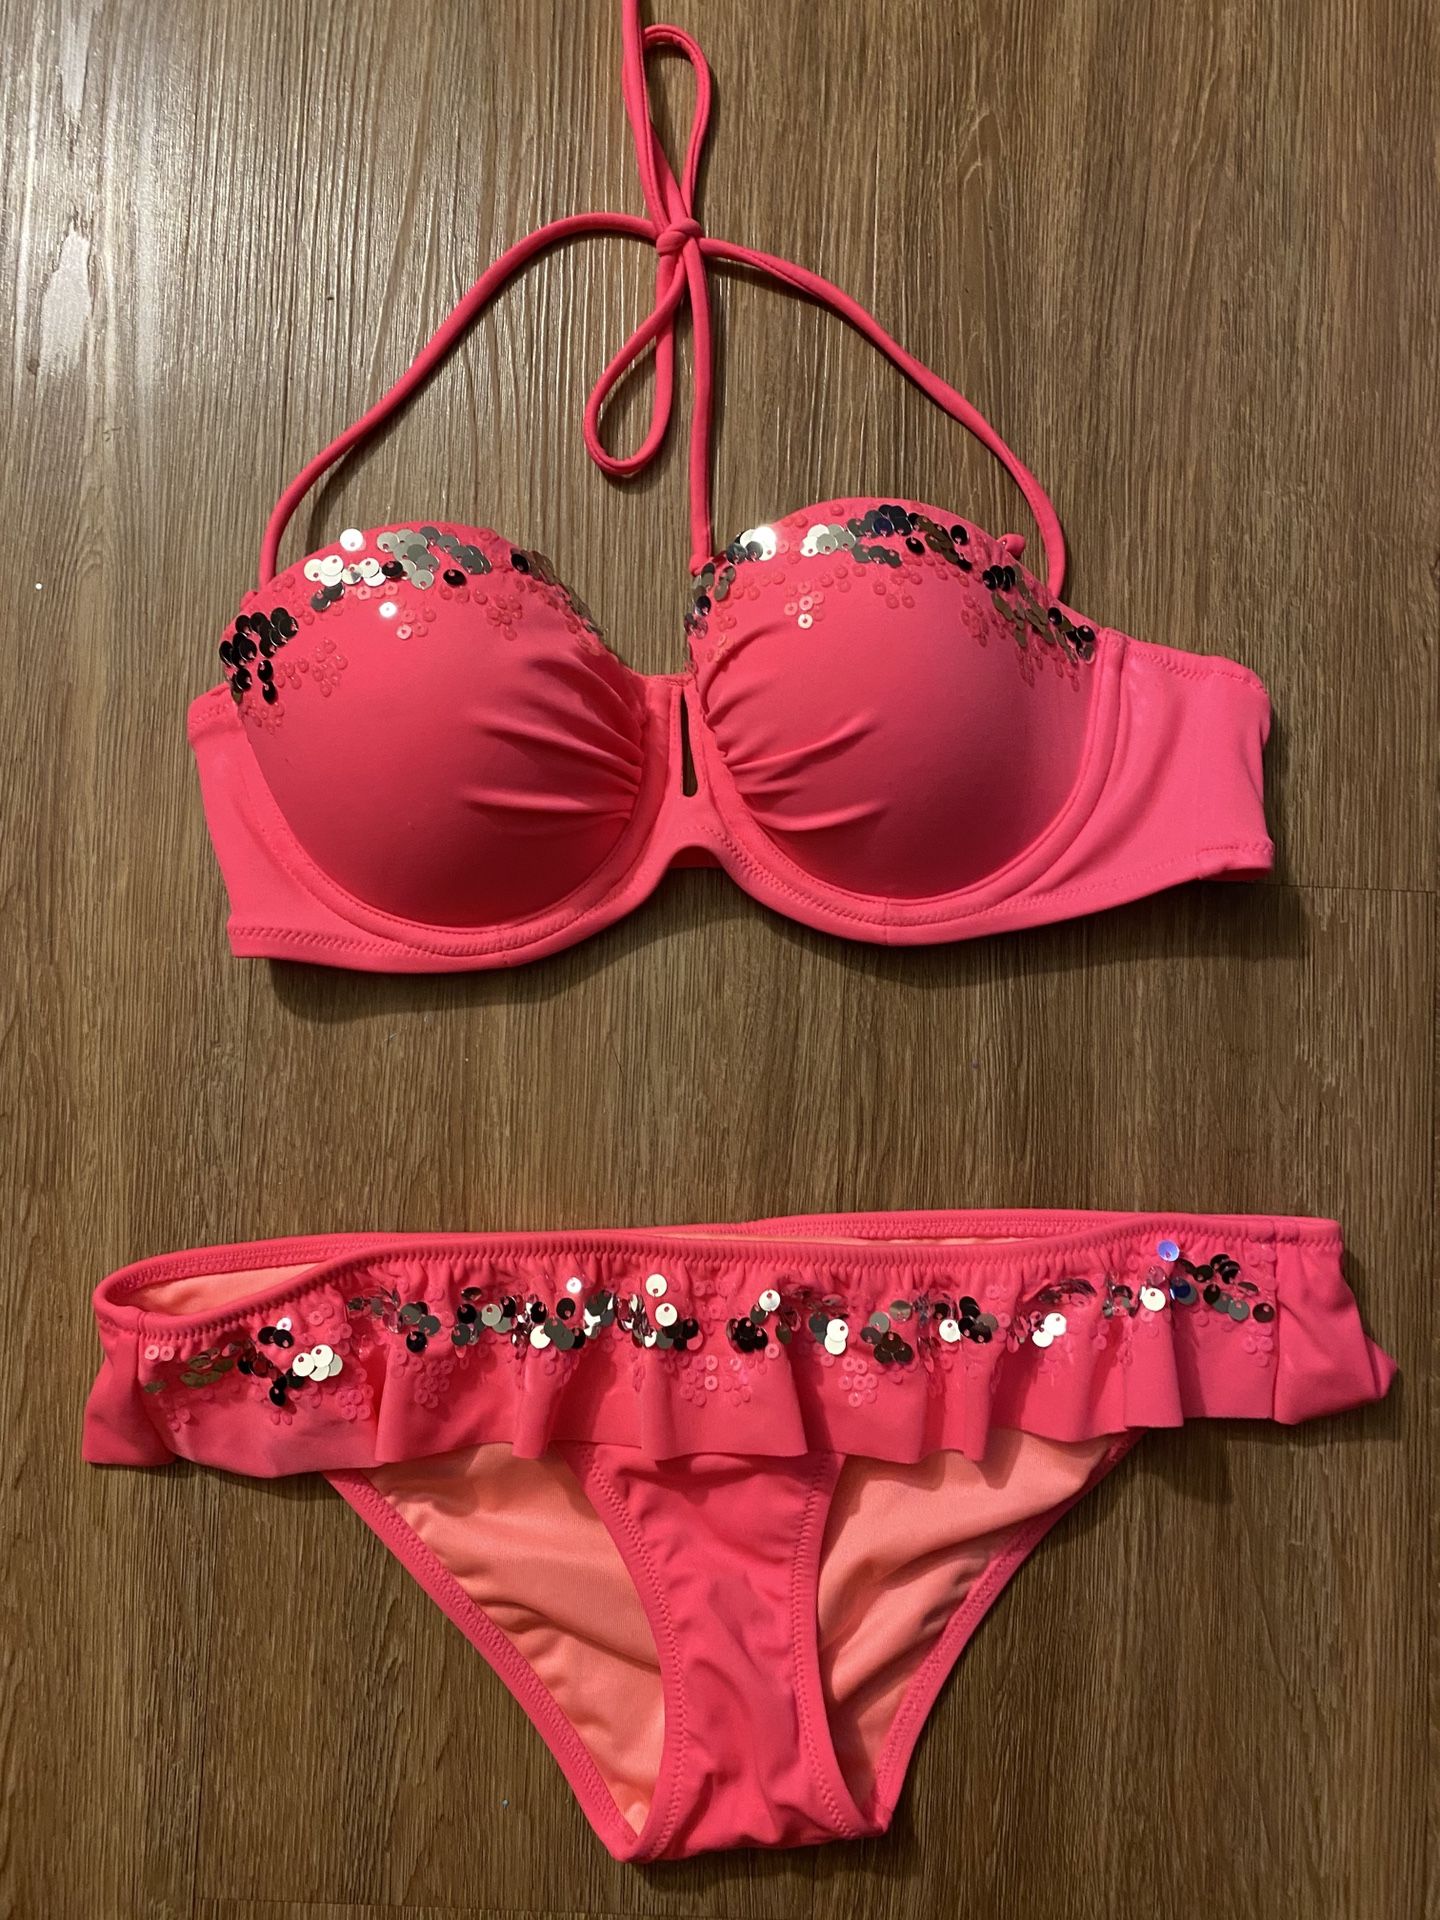 NWOT Victoria Secret Hot Pink Sequin Bikini Set - XS